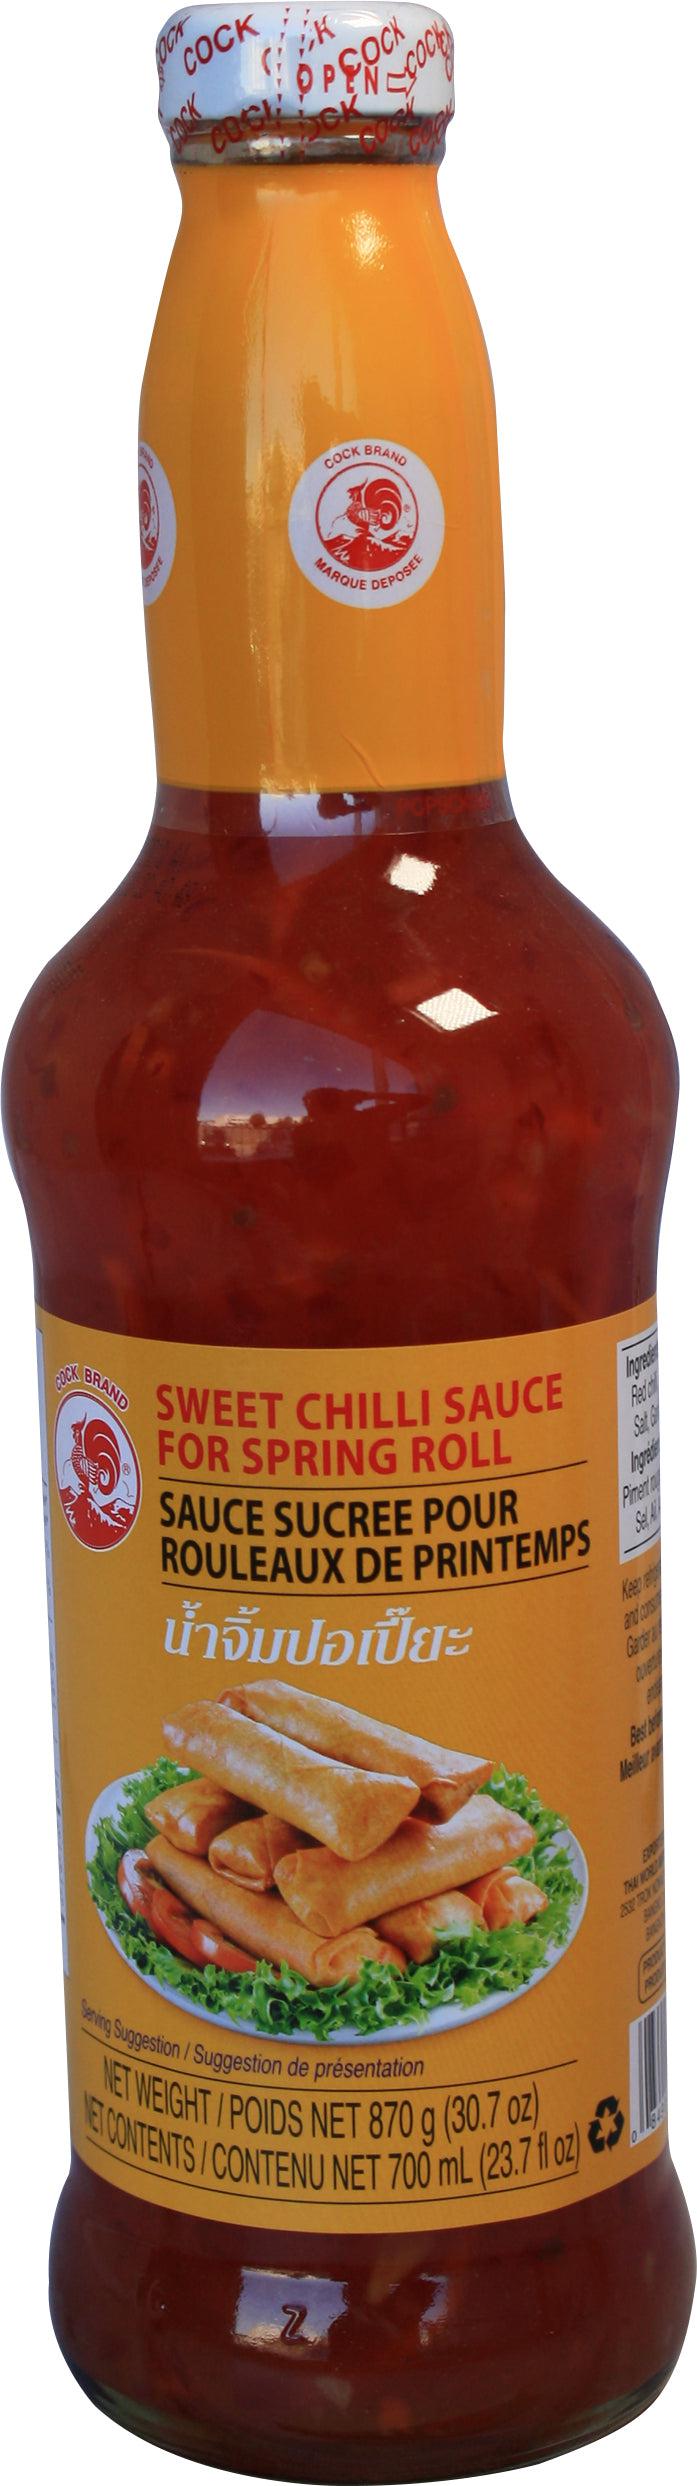 Cock Brand - Sweet Chilli Sauce - Spring Rolls